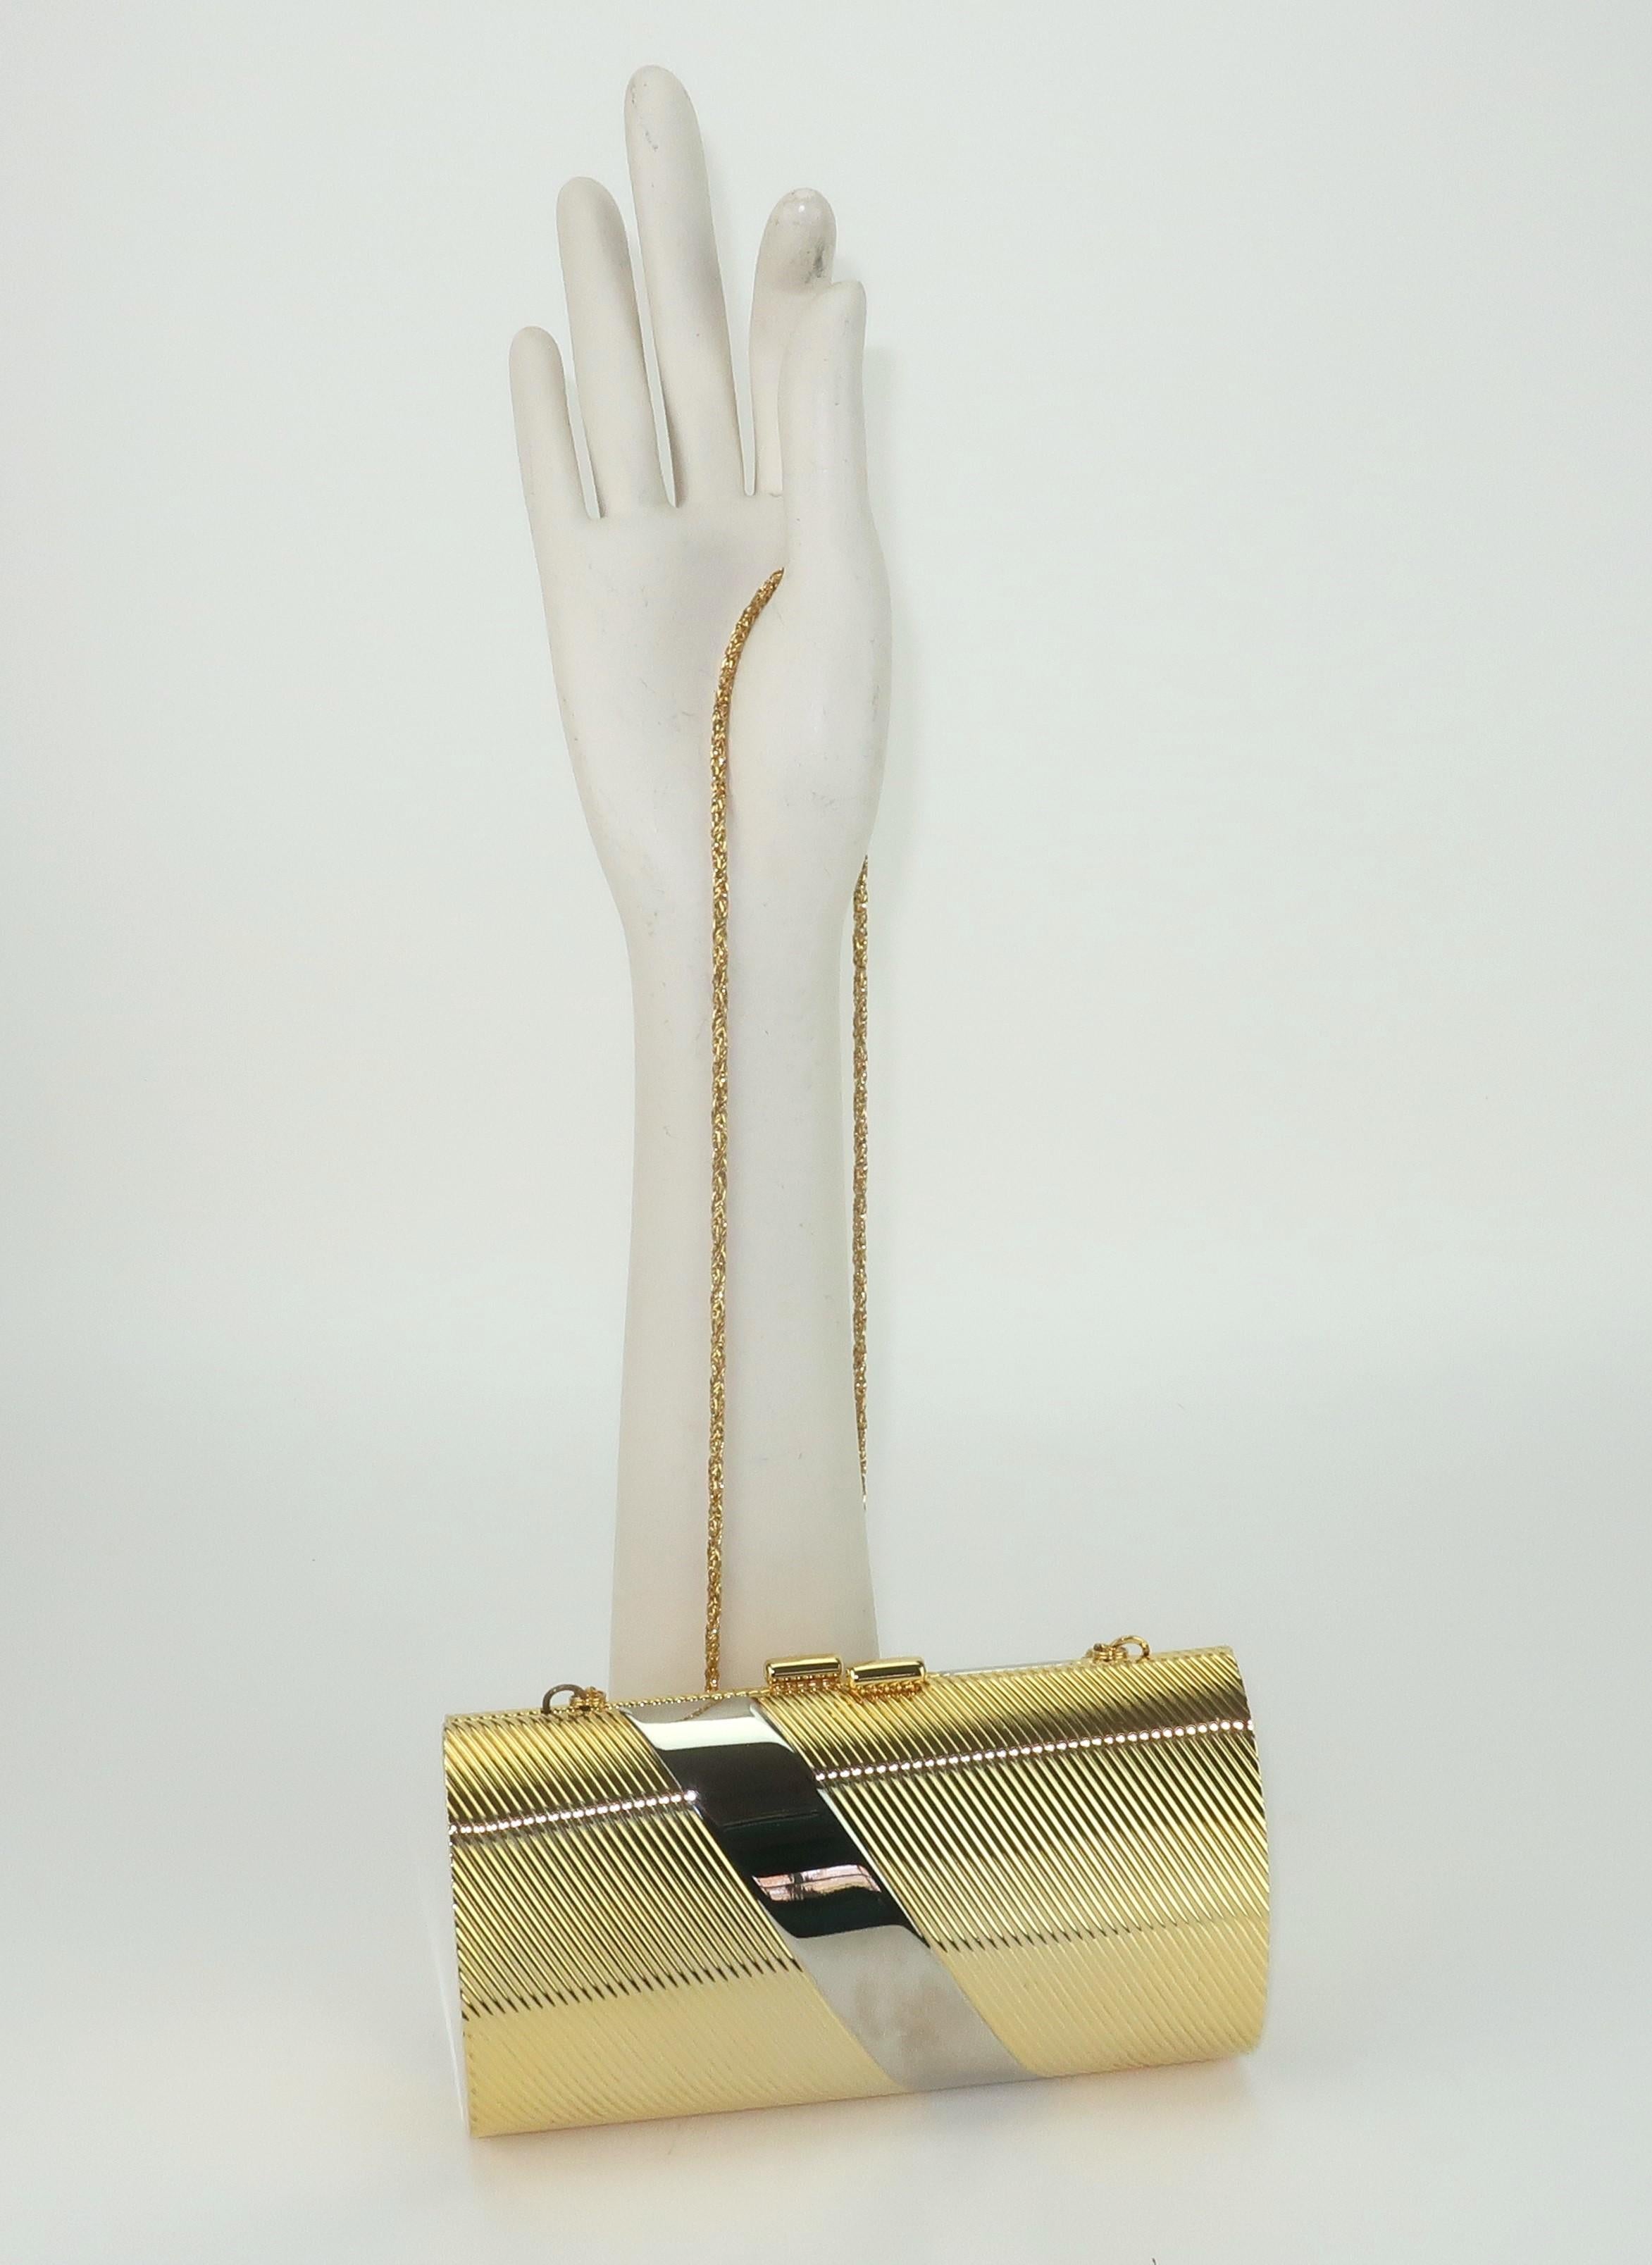 Neiman Marcus Gold & Silver Metal Clutch Handbag With Drop-In Chain, 1980's 7